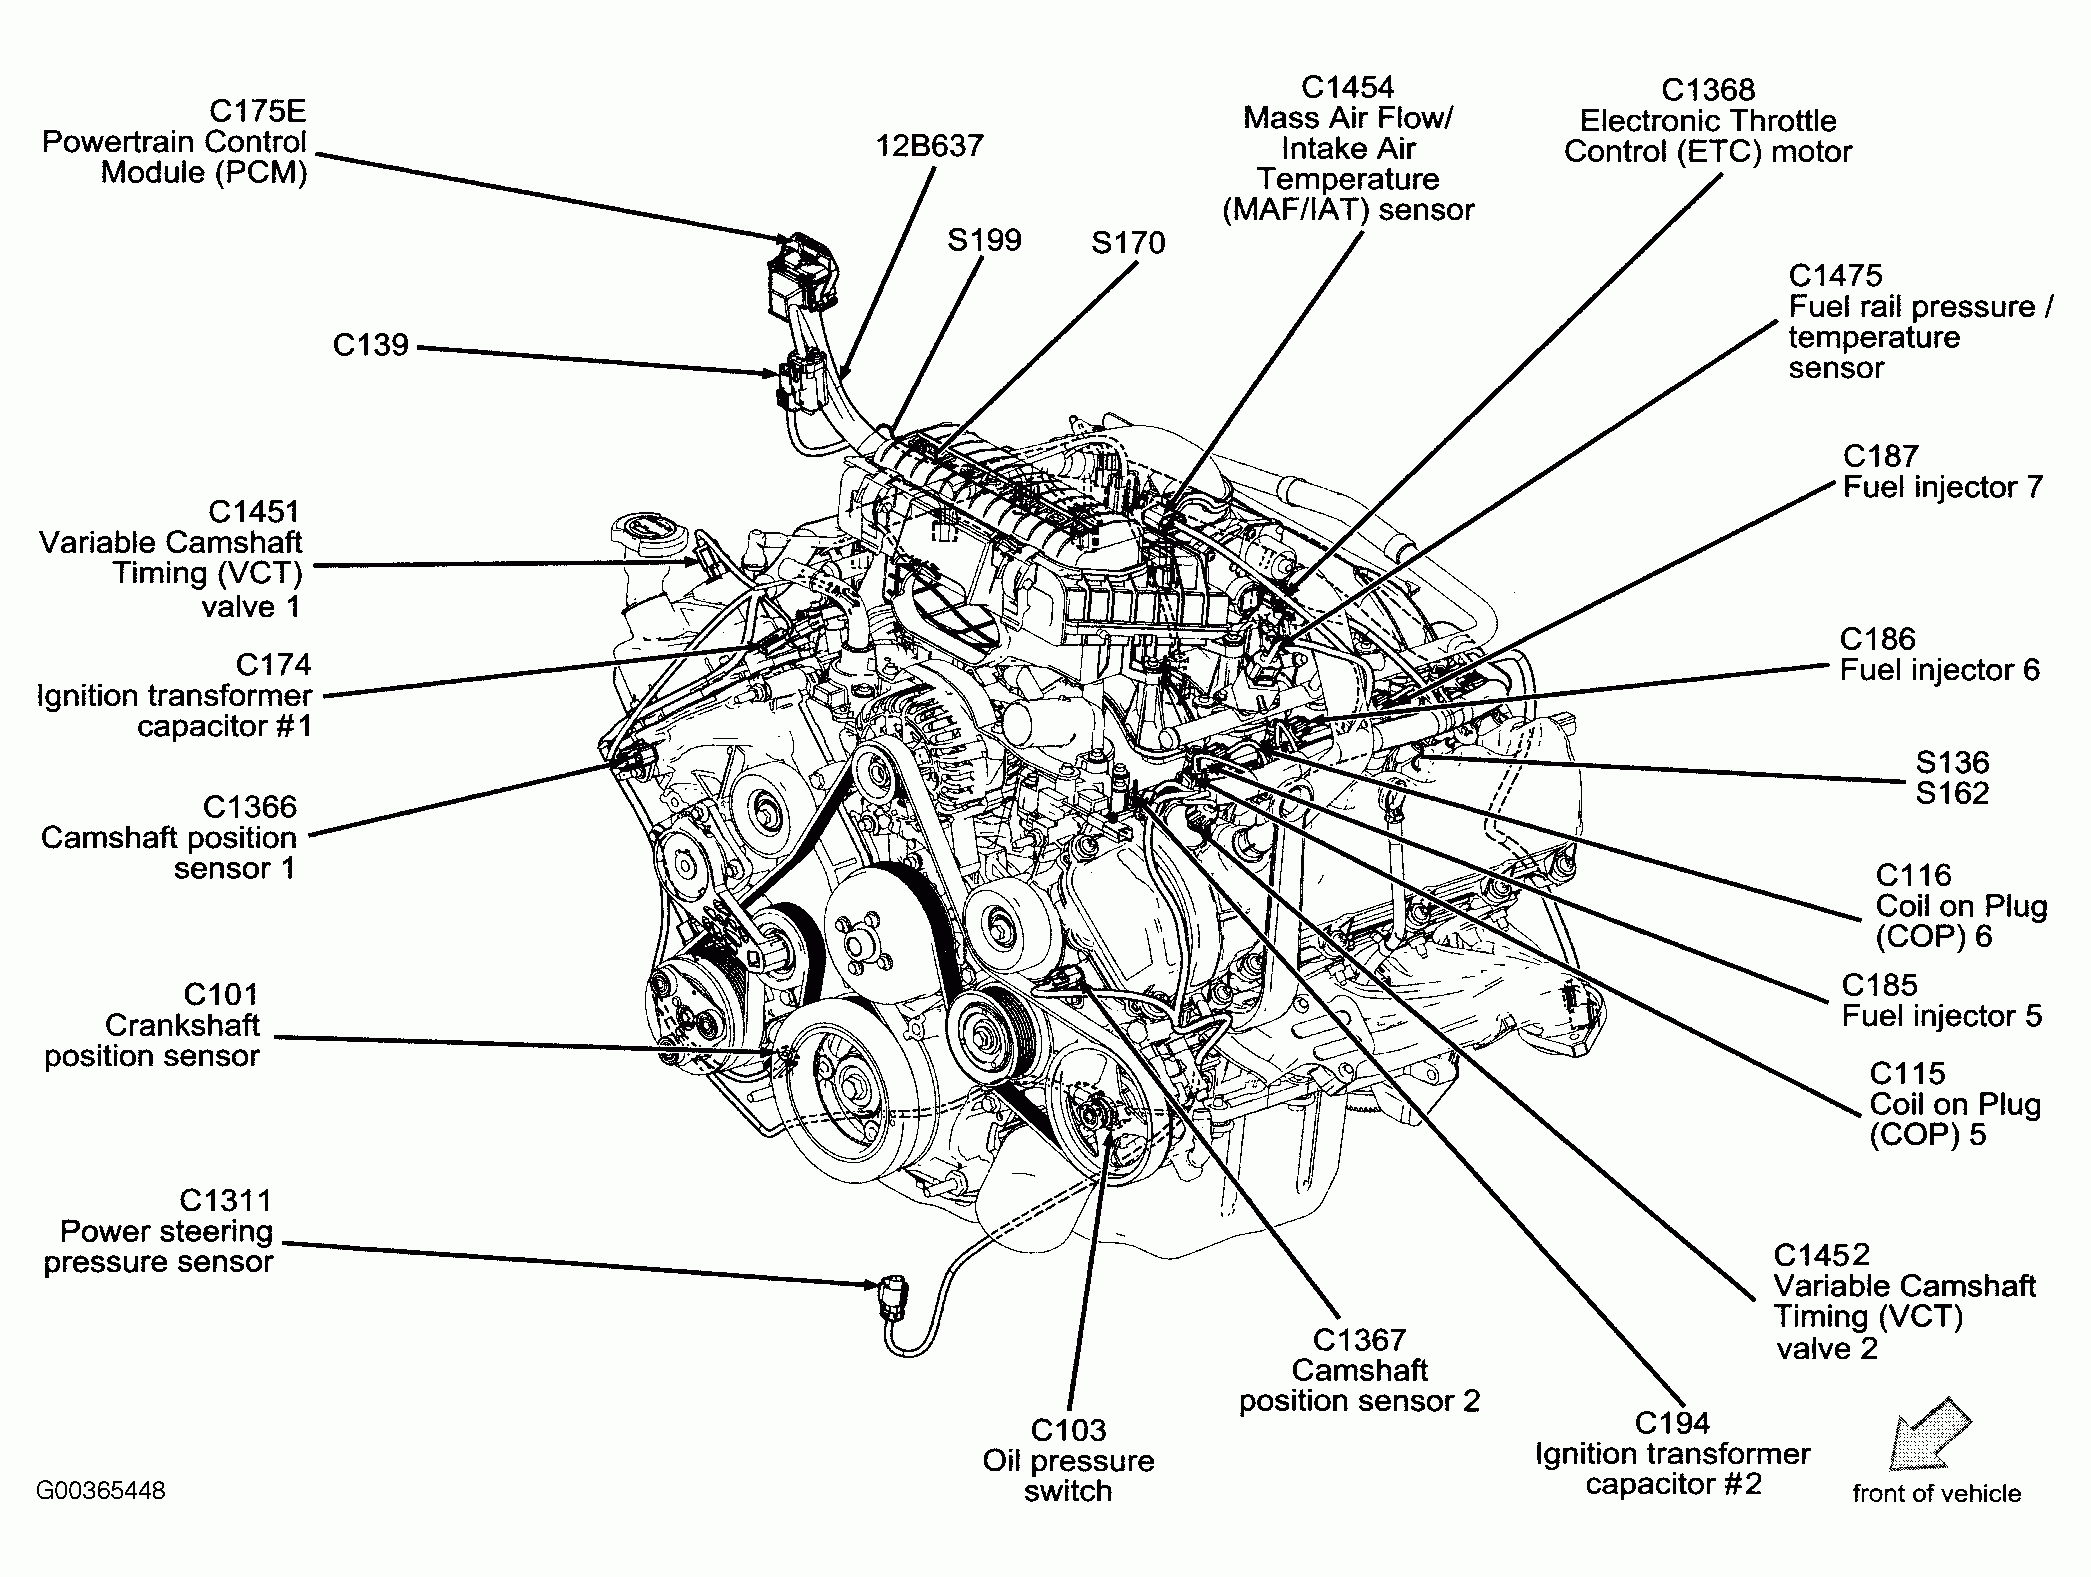 Firing Order Ford 4.2 Liter V6 Engine Diagram